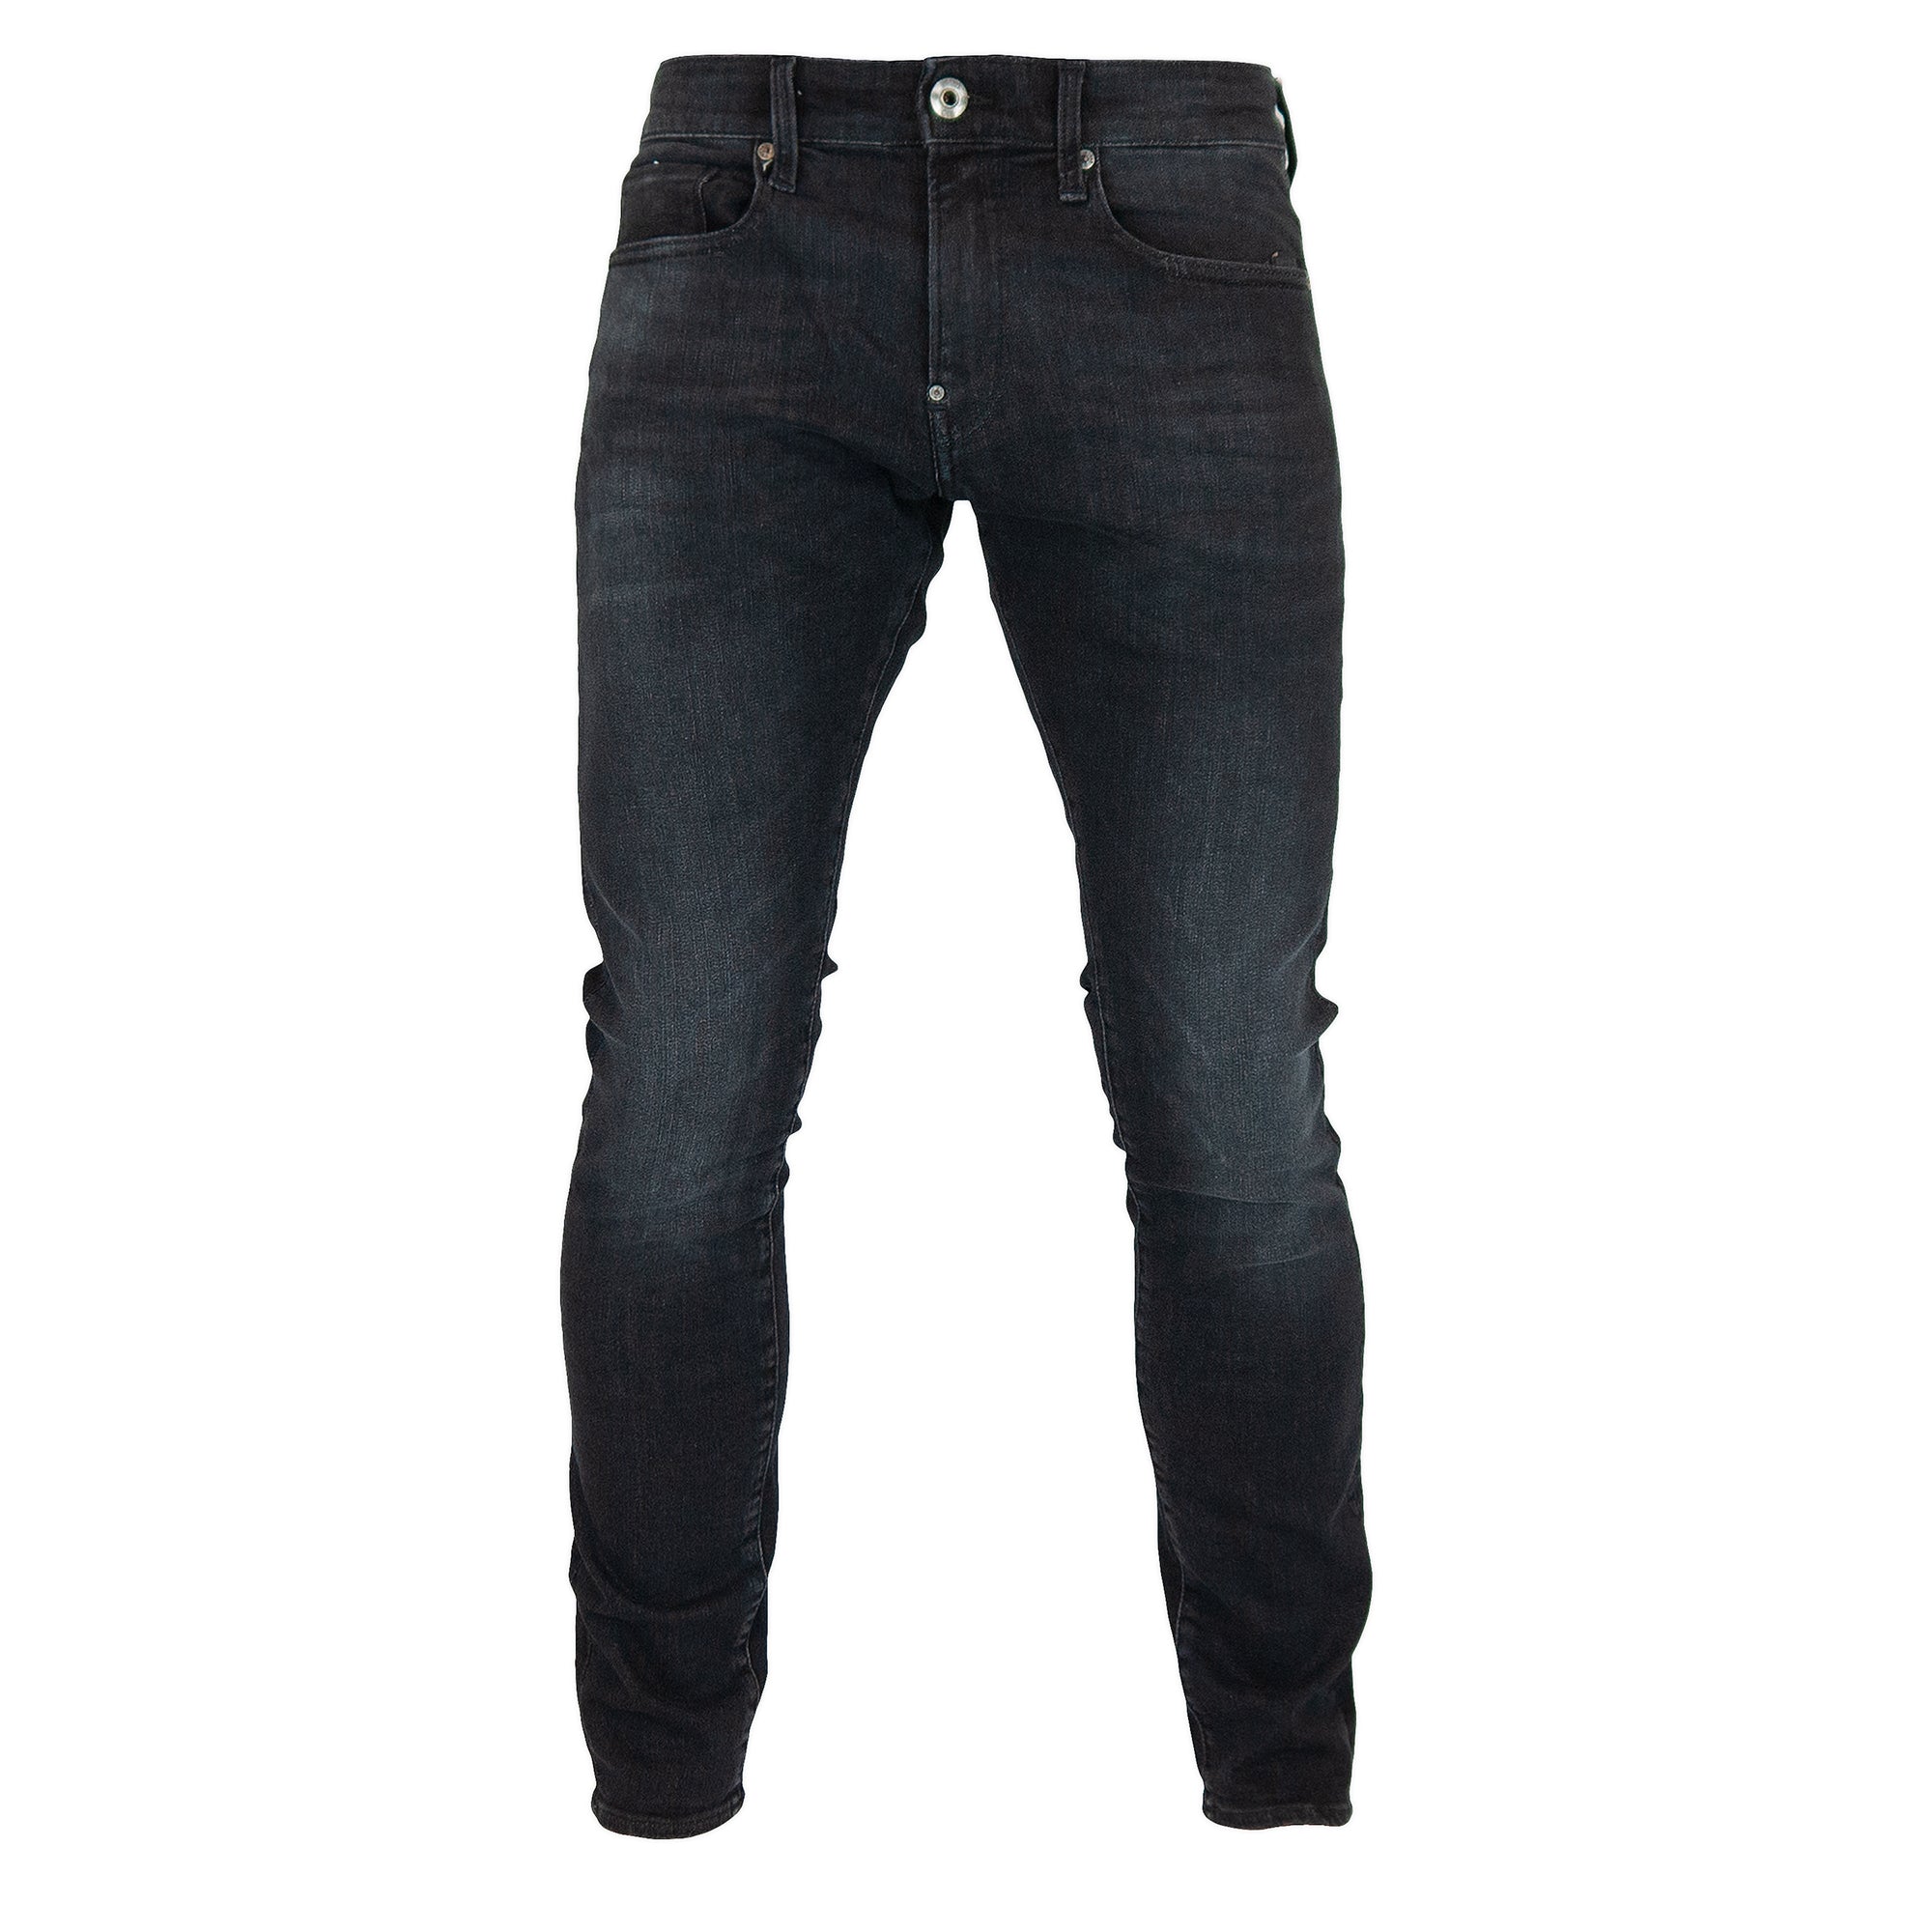 G-Star Revend Skinny Jeans - Medium Elto Superstretch Aged Black Faded